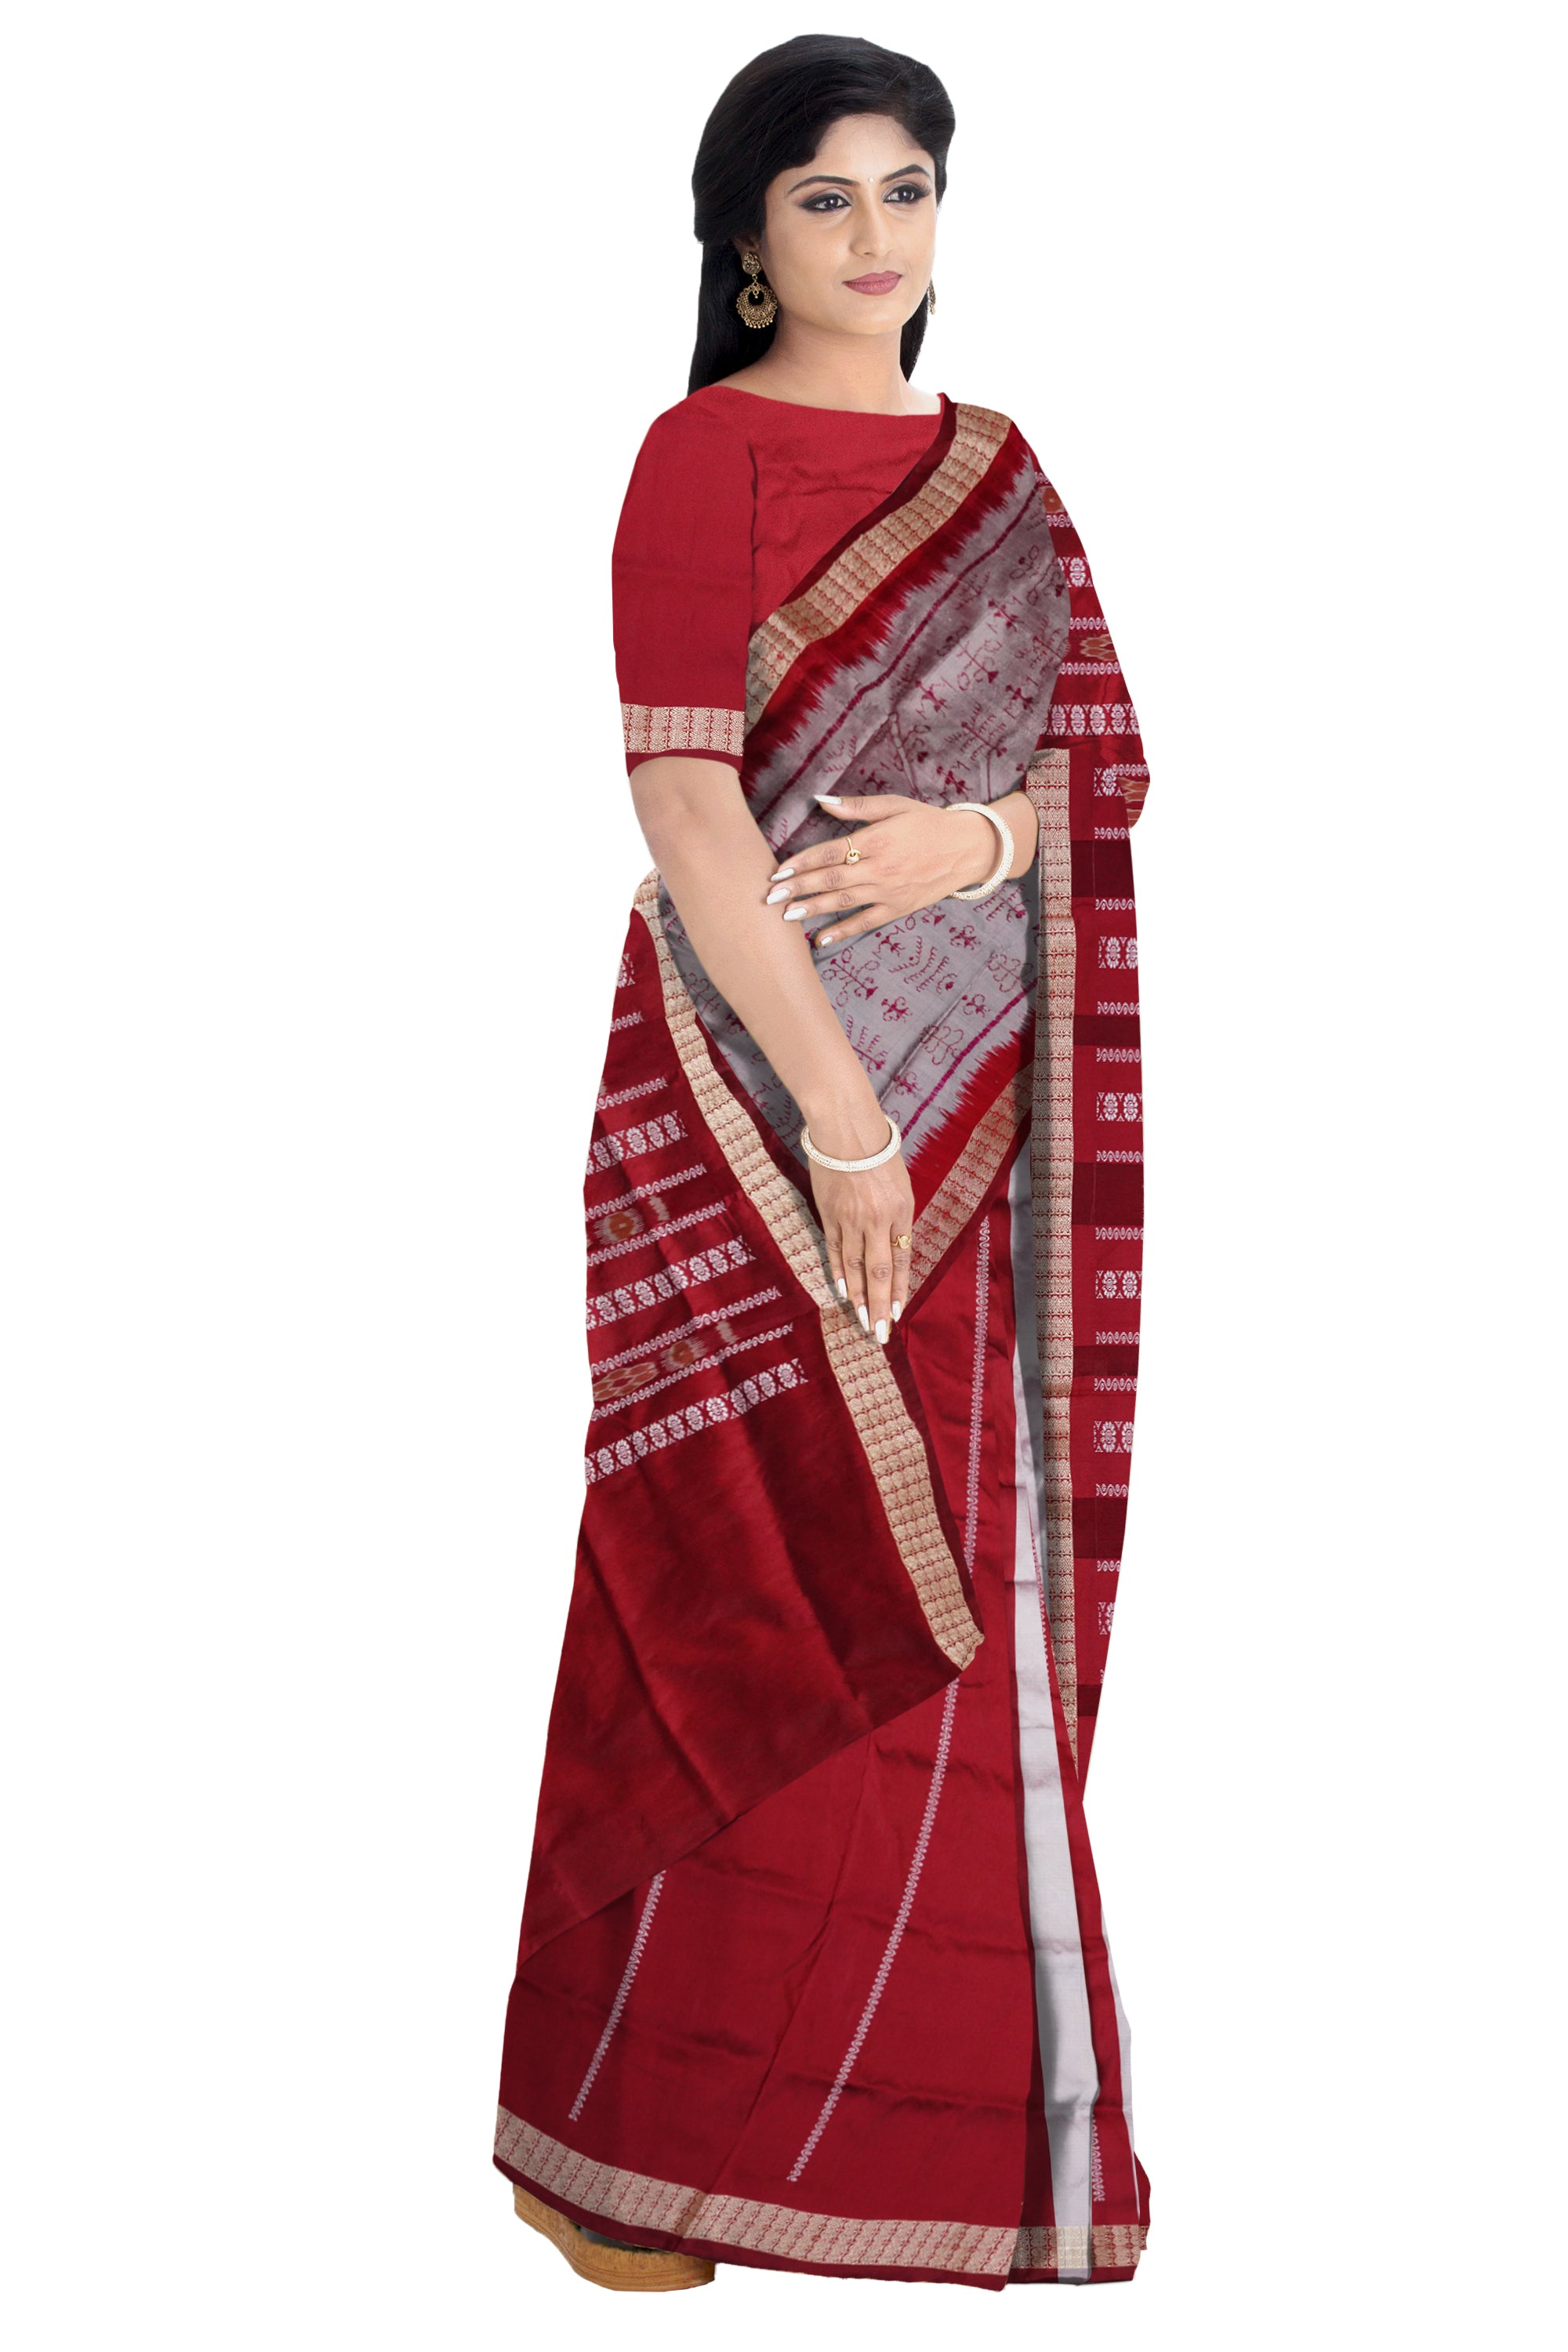 Latest silver and maroon terracotta patli pata saree with bandha pattern pallu design, a stunning addition to your wardrobe. - Koshali Arts & Crafts Enterprise